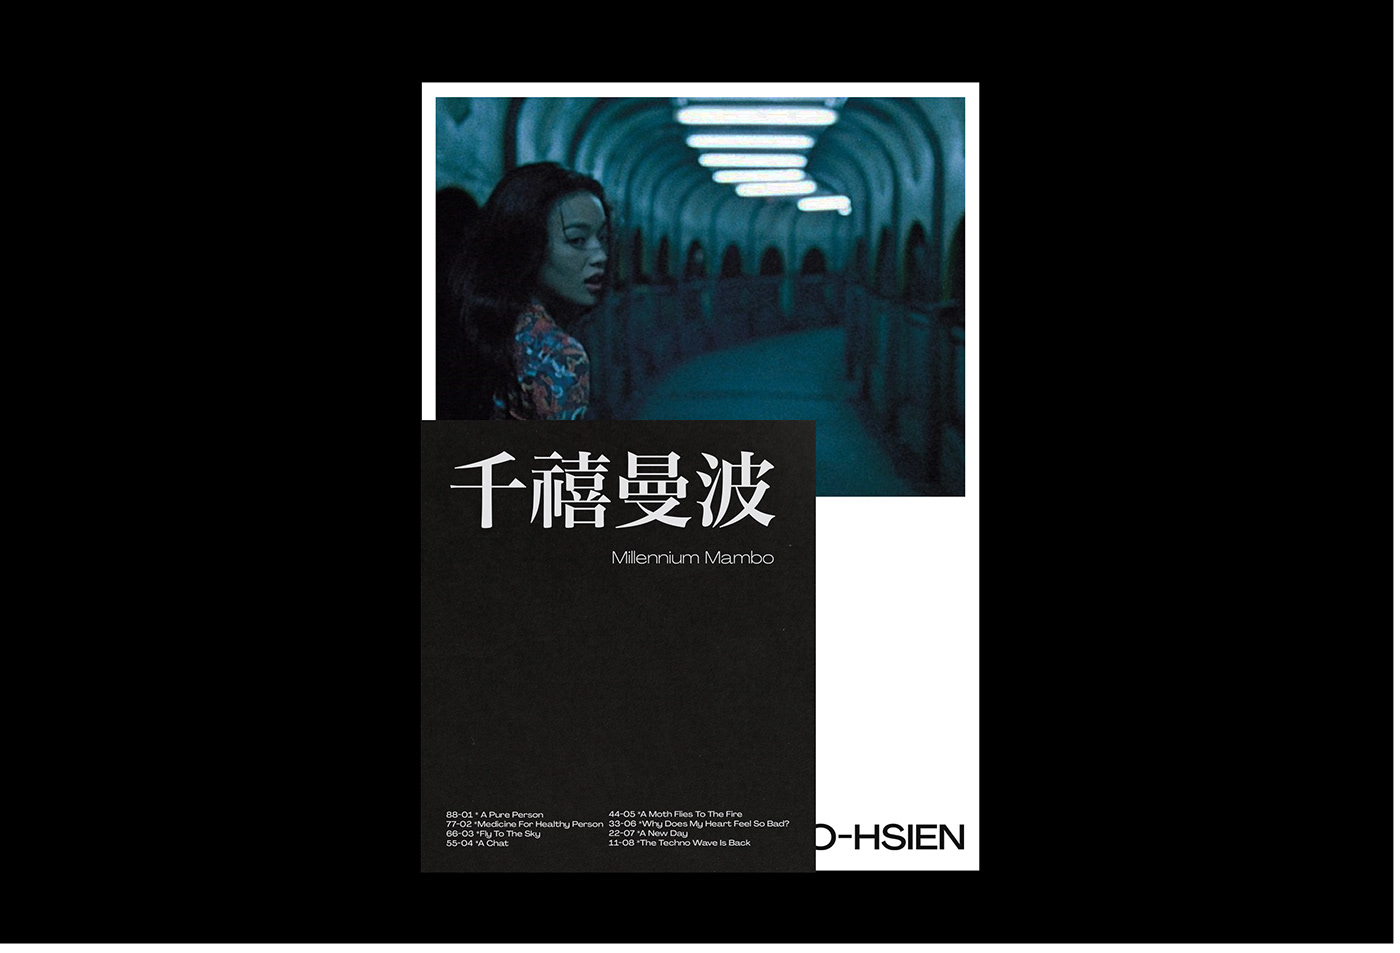 Asianmovie branding  Film   hsiao-hsien identity milleniummambo poster print Stationery